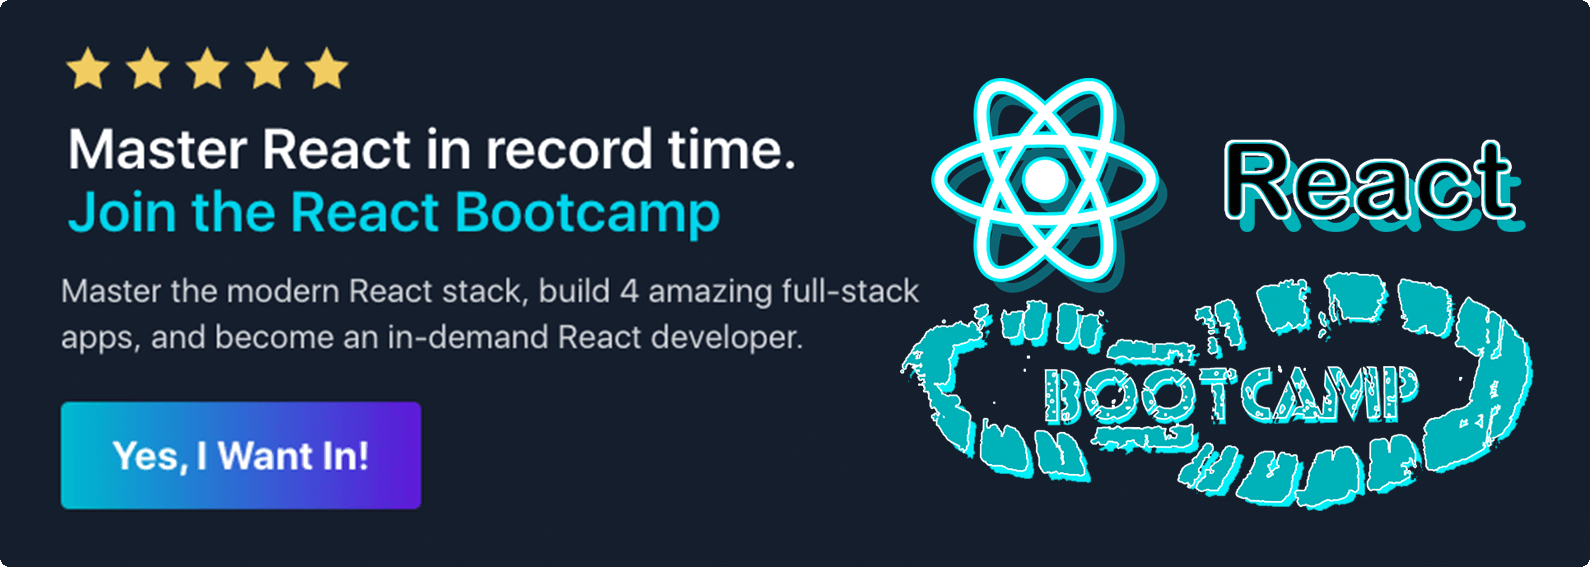 react-bootcamp-1